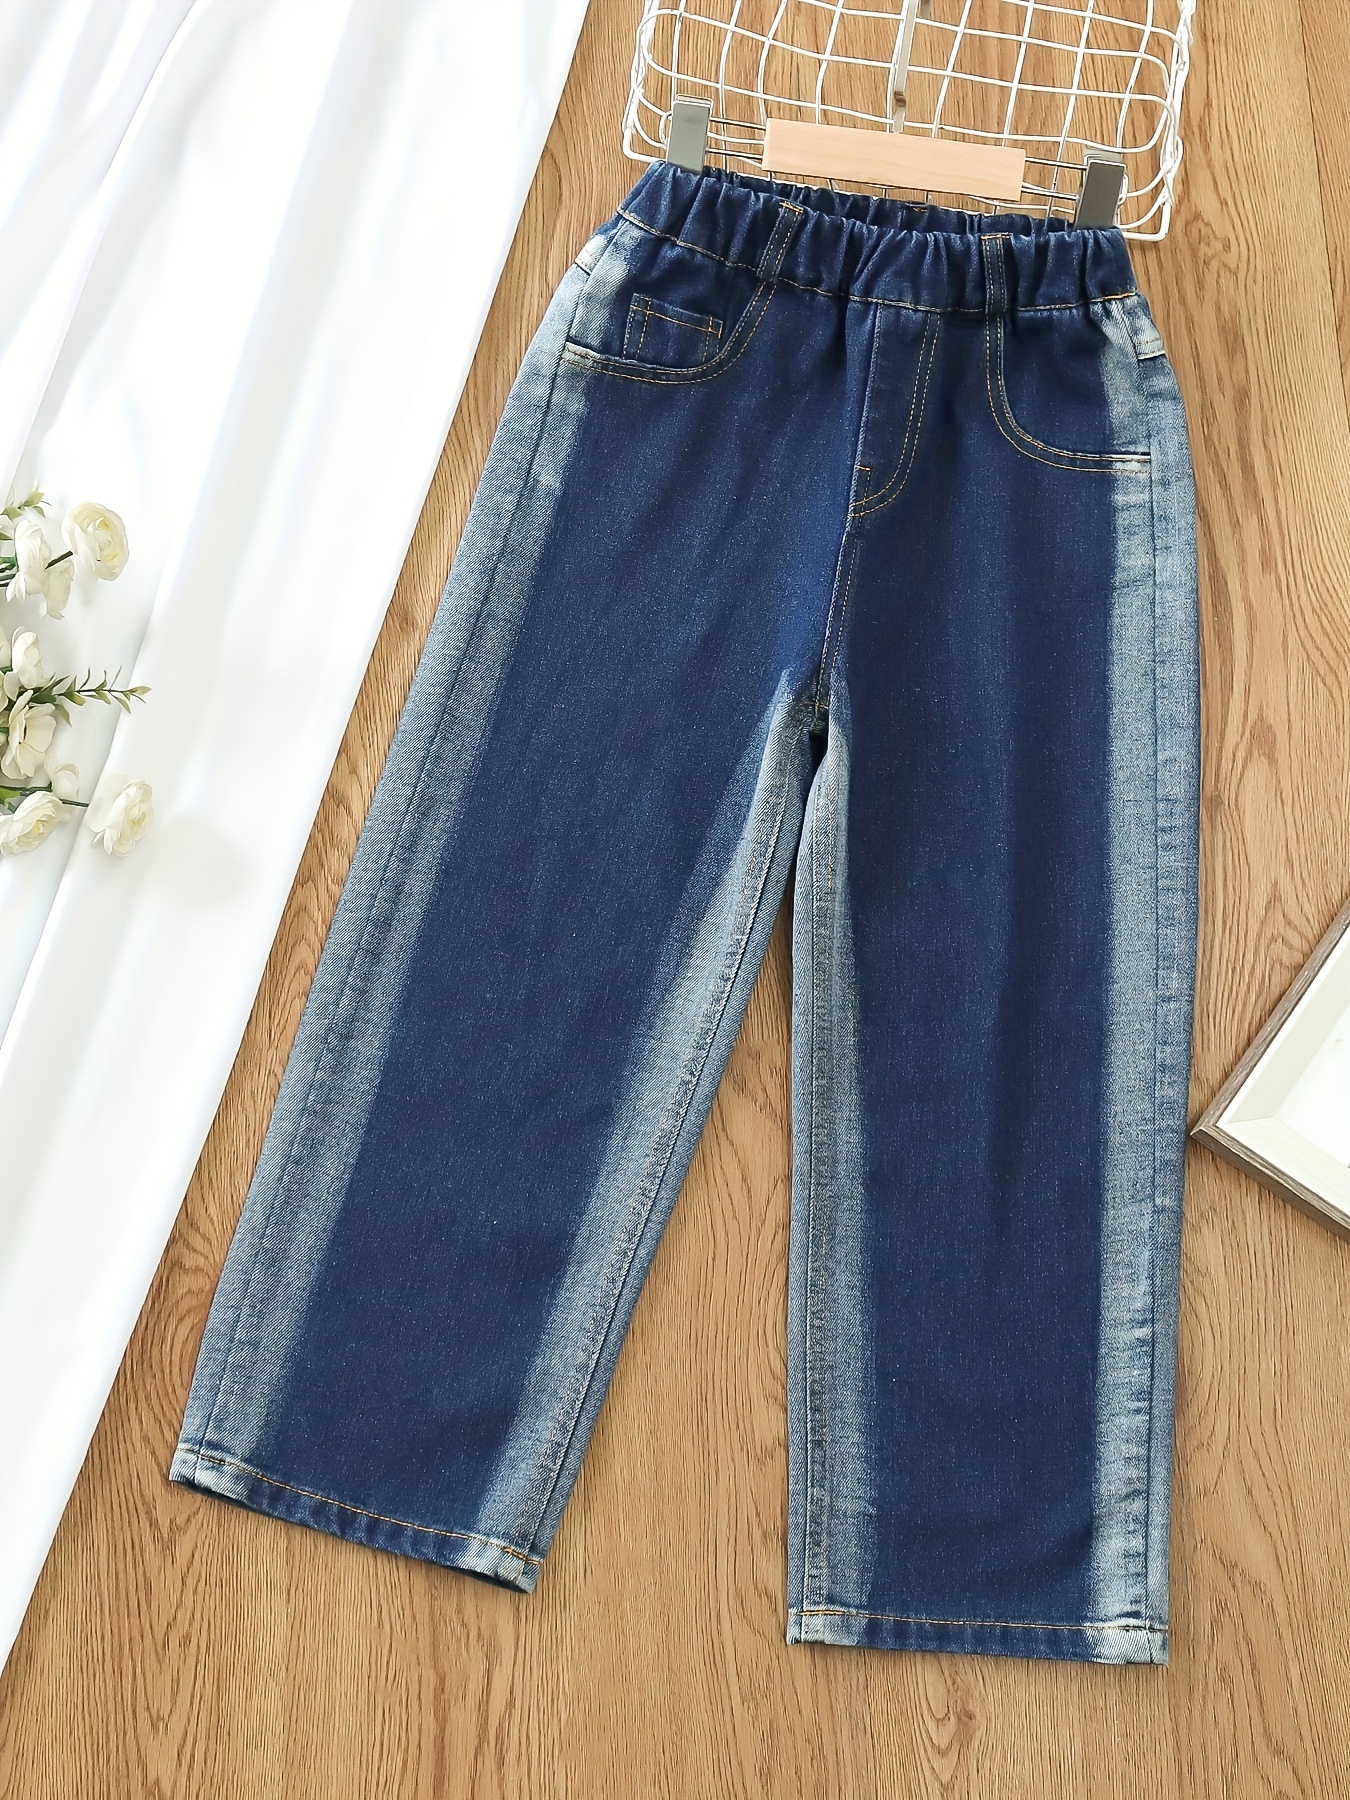 Fashion Girls Bell-bottom Jeans Stitching Leopard Design Flare Leg Pants